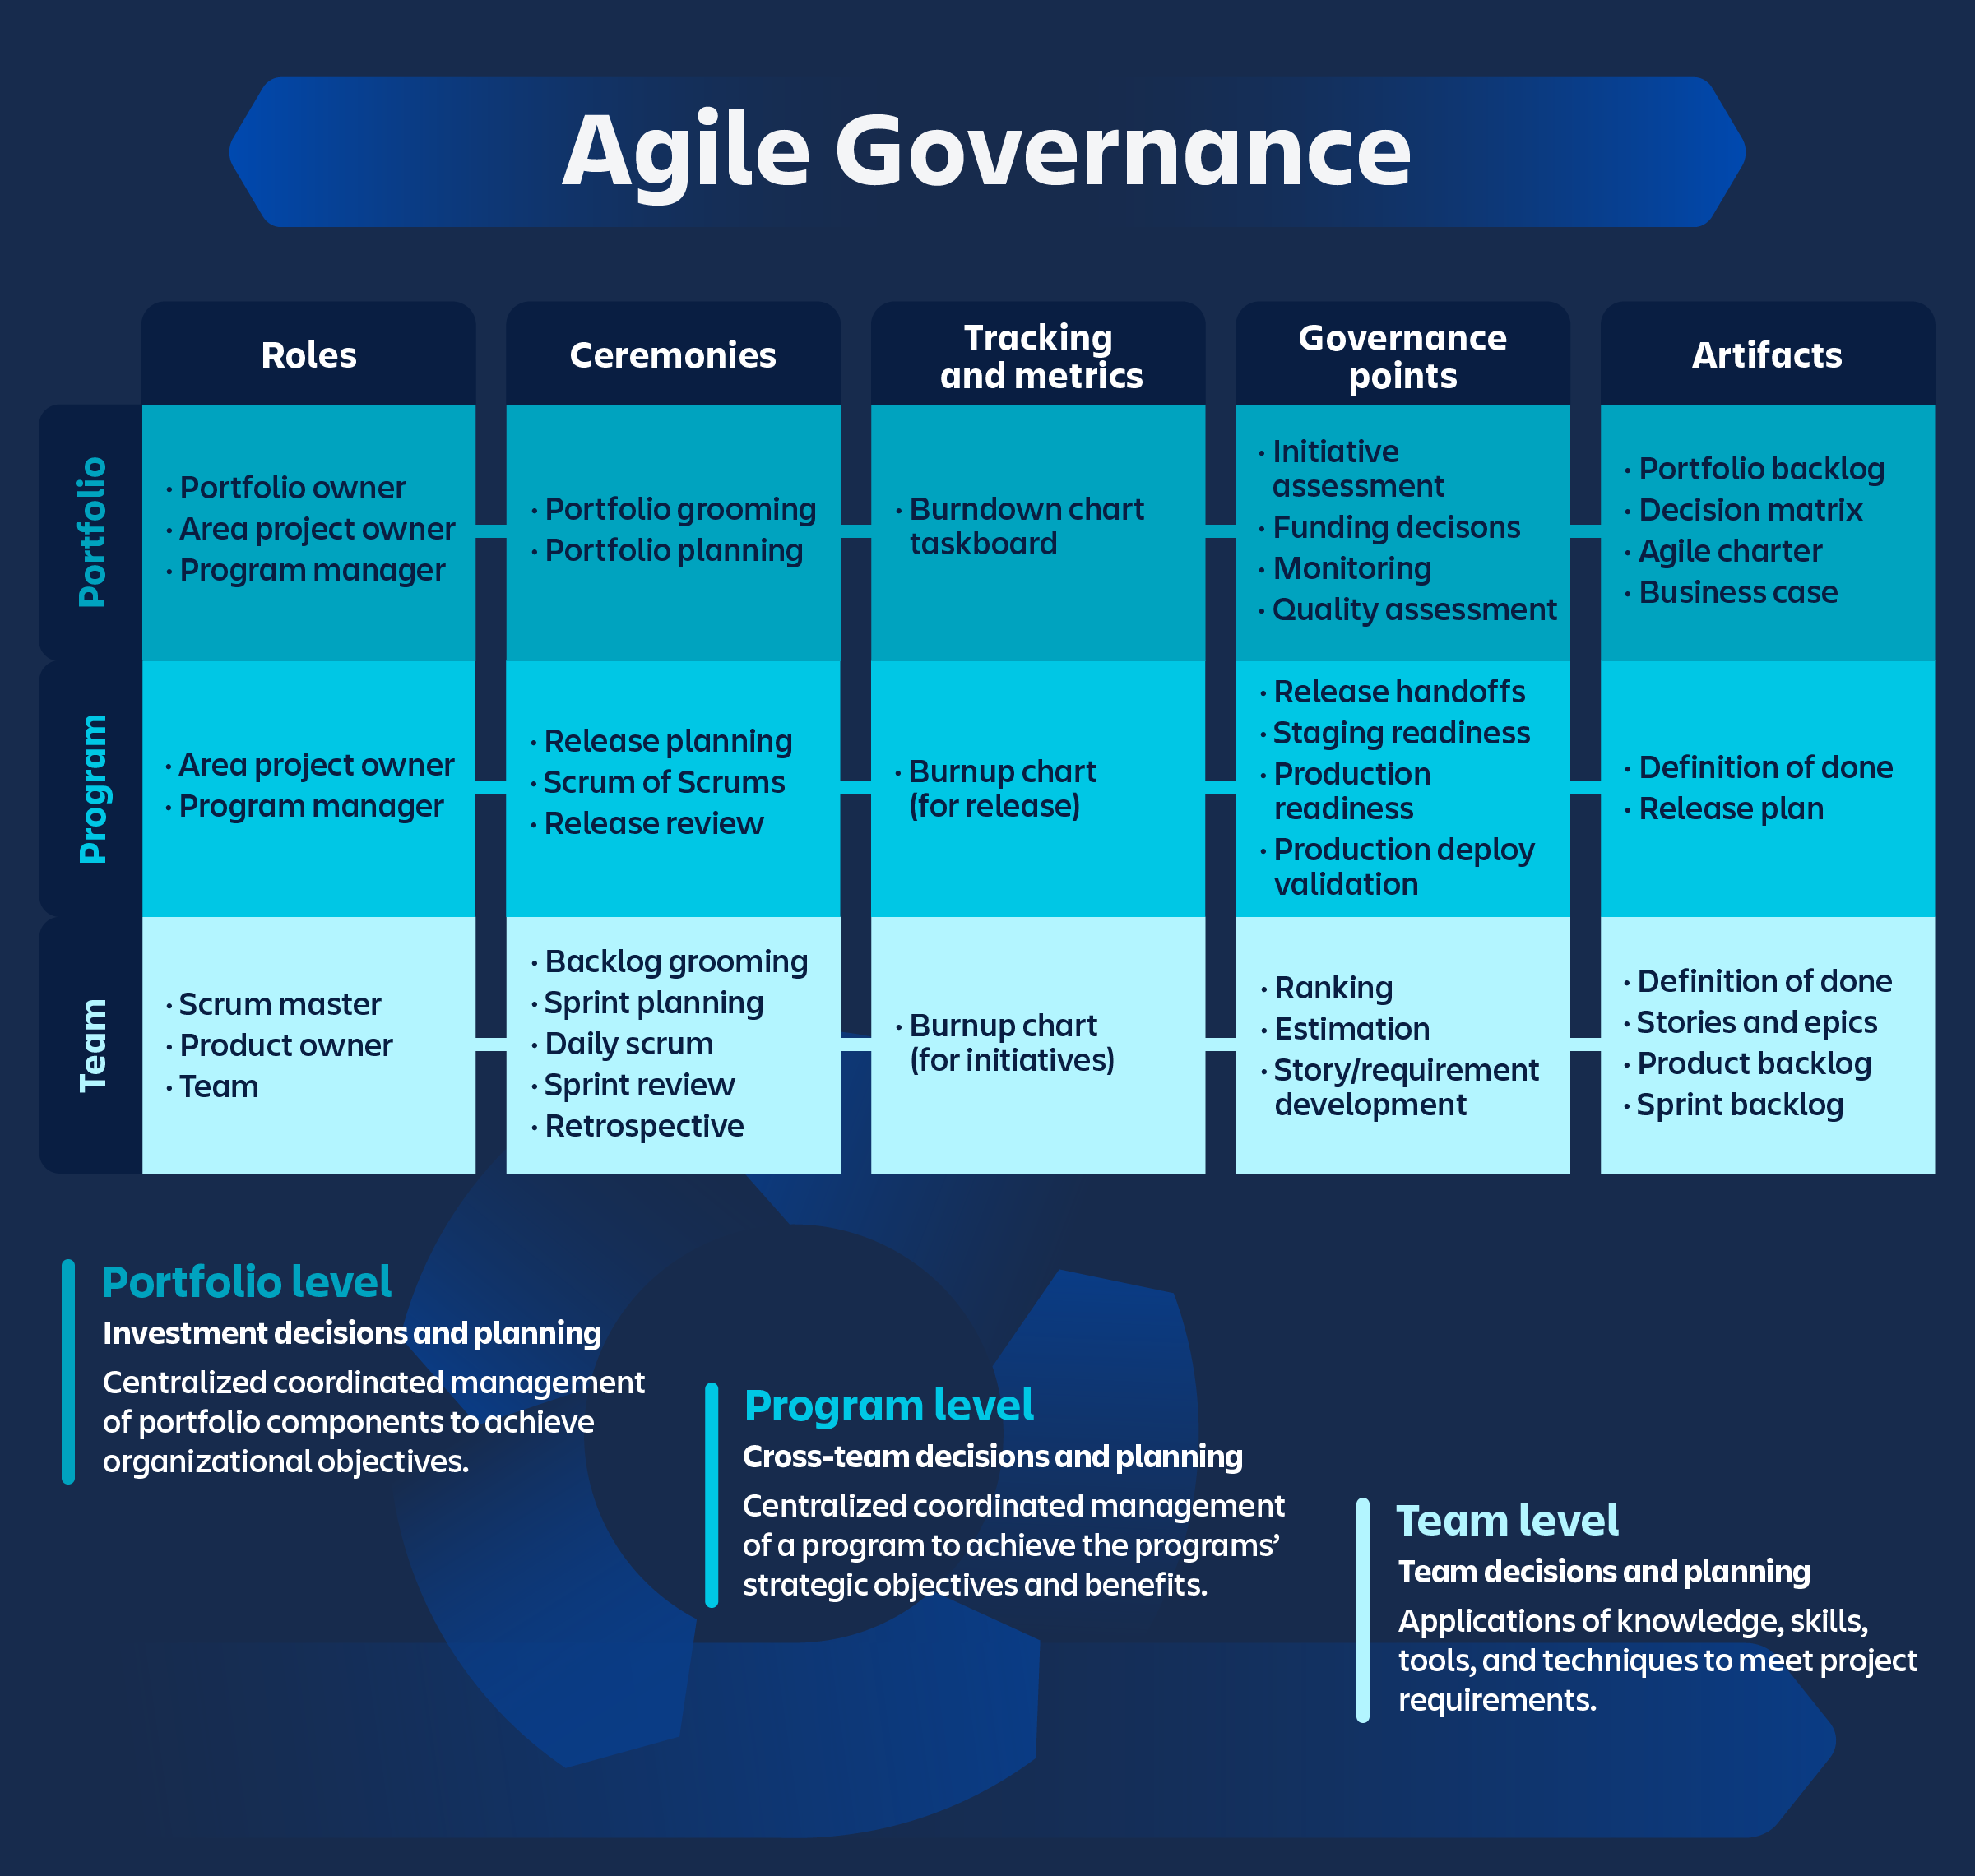 Agile governance chart and description